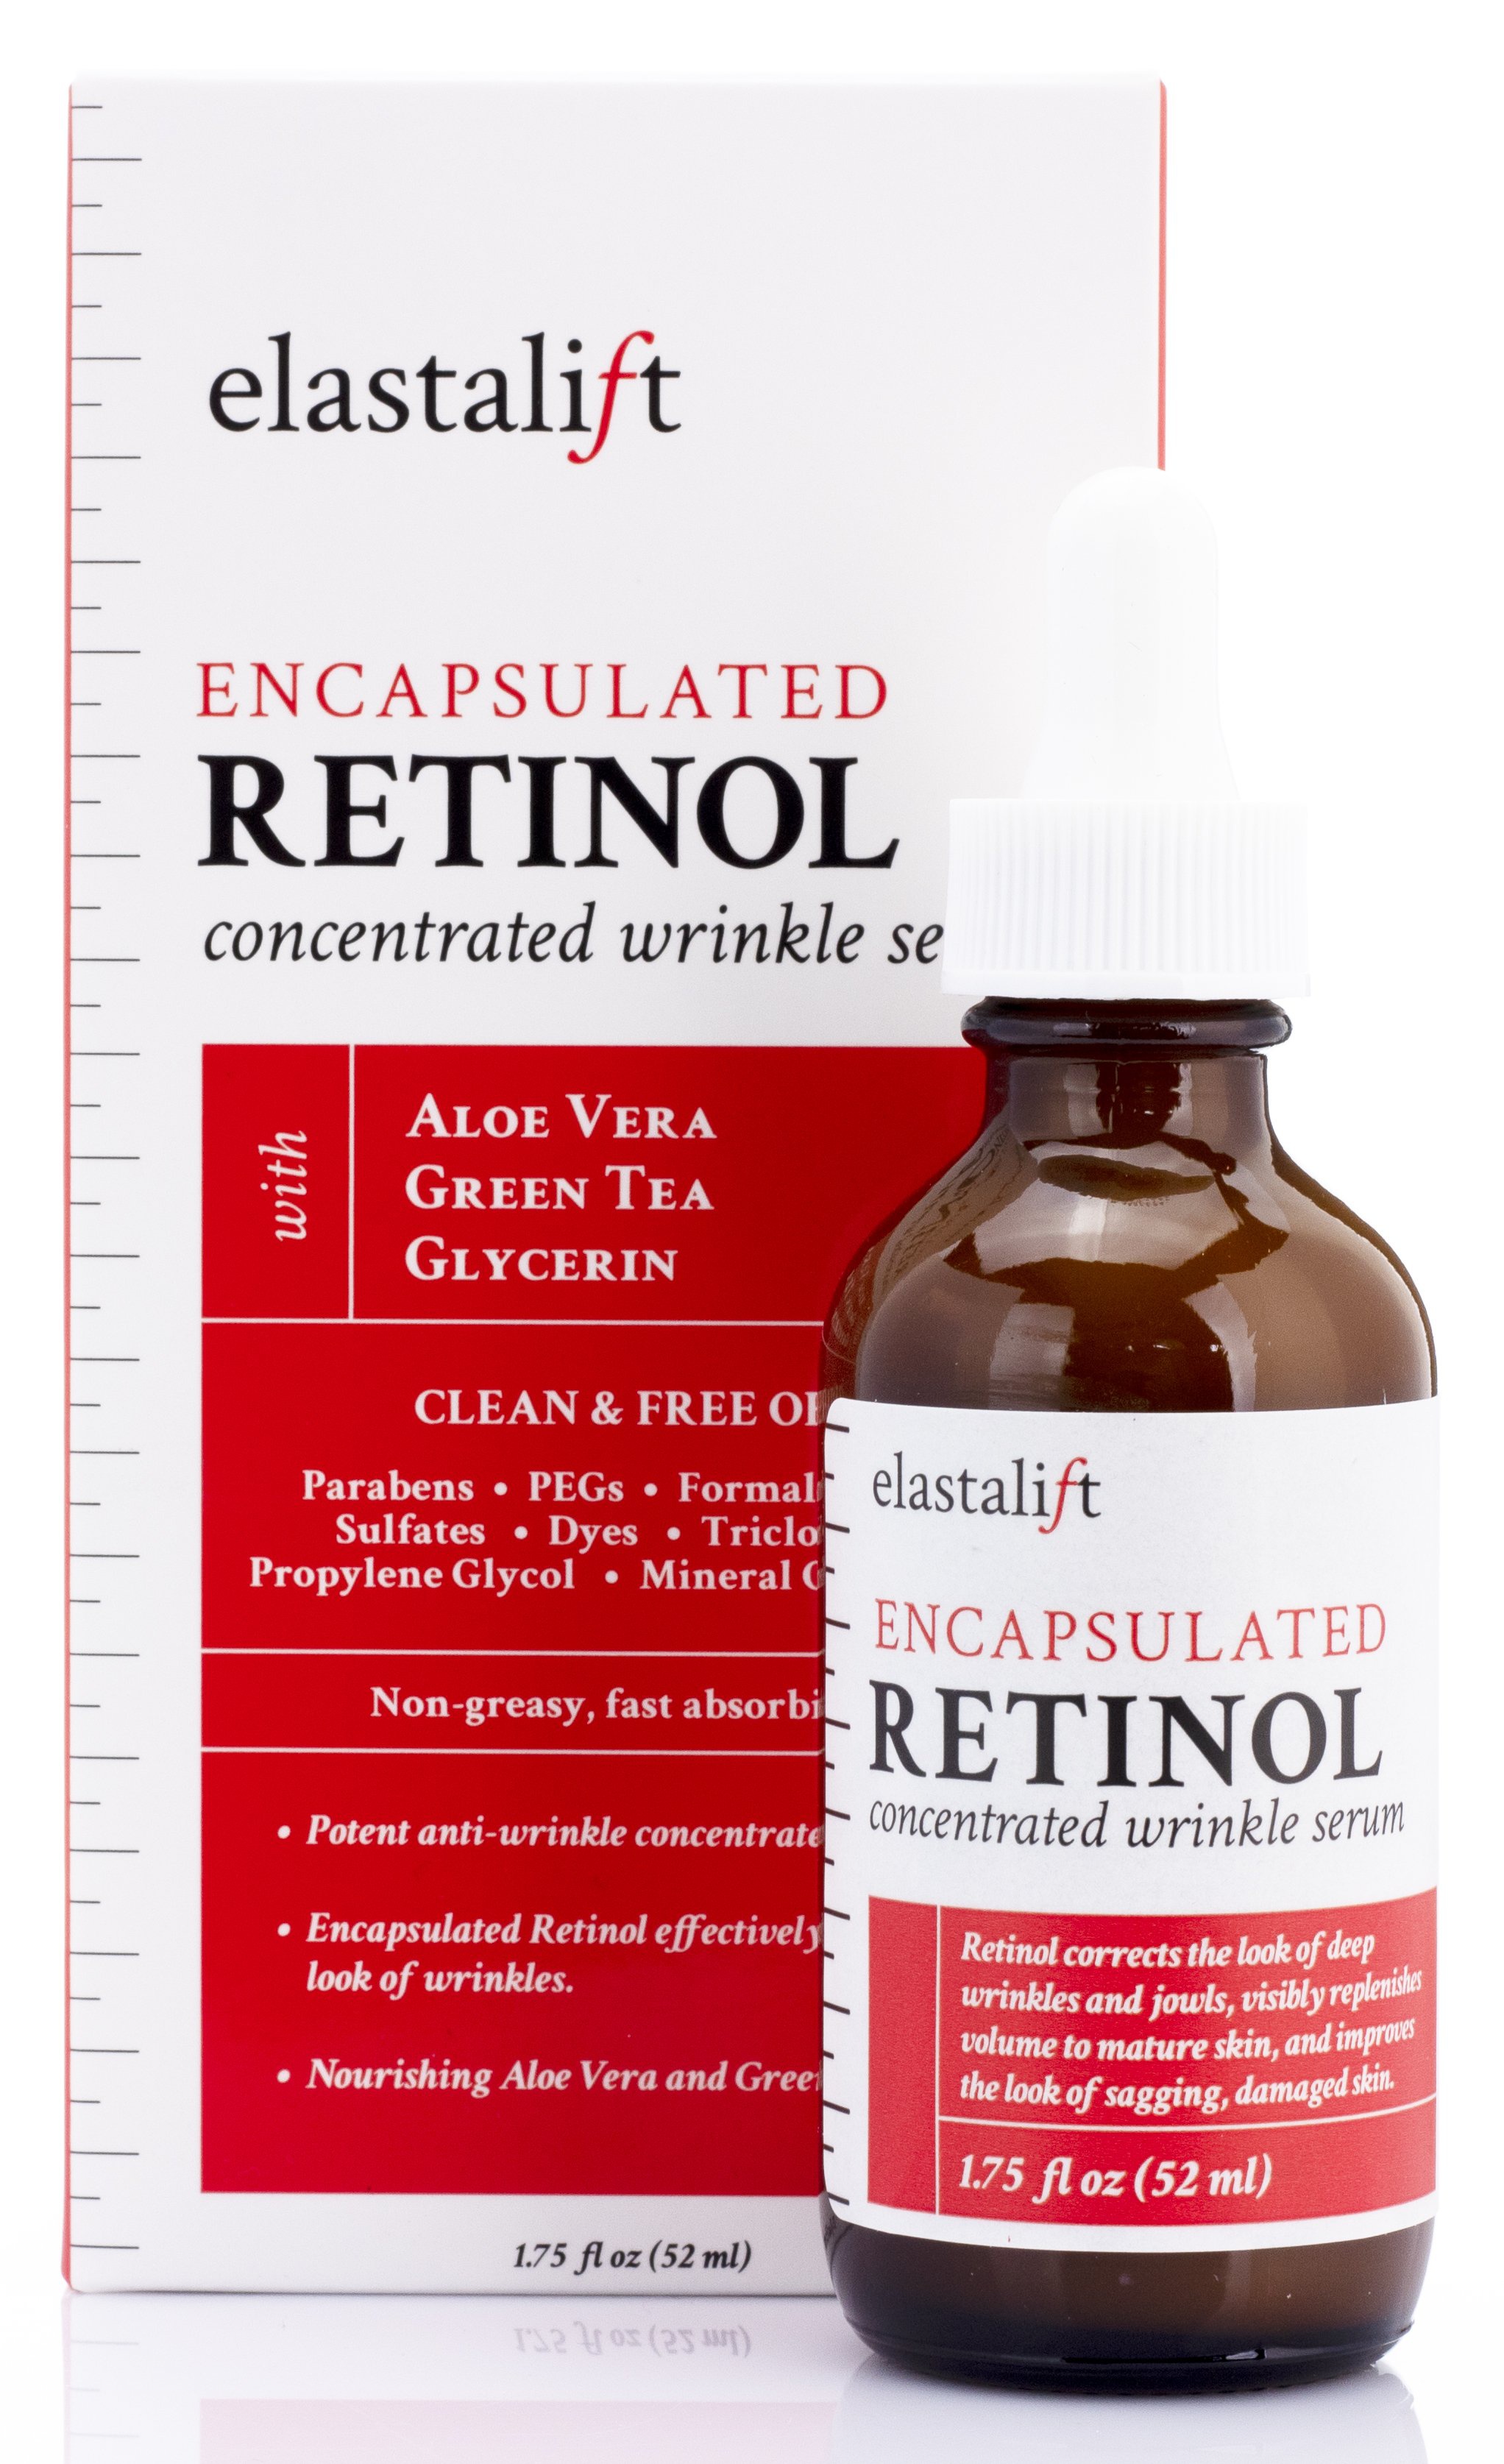 Elastalift Encapsulated Retinol